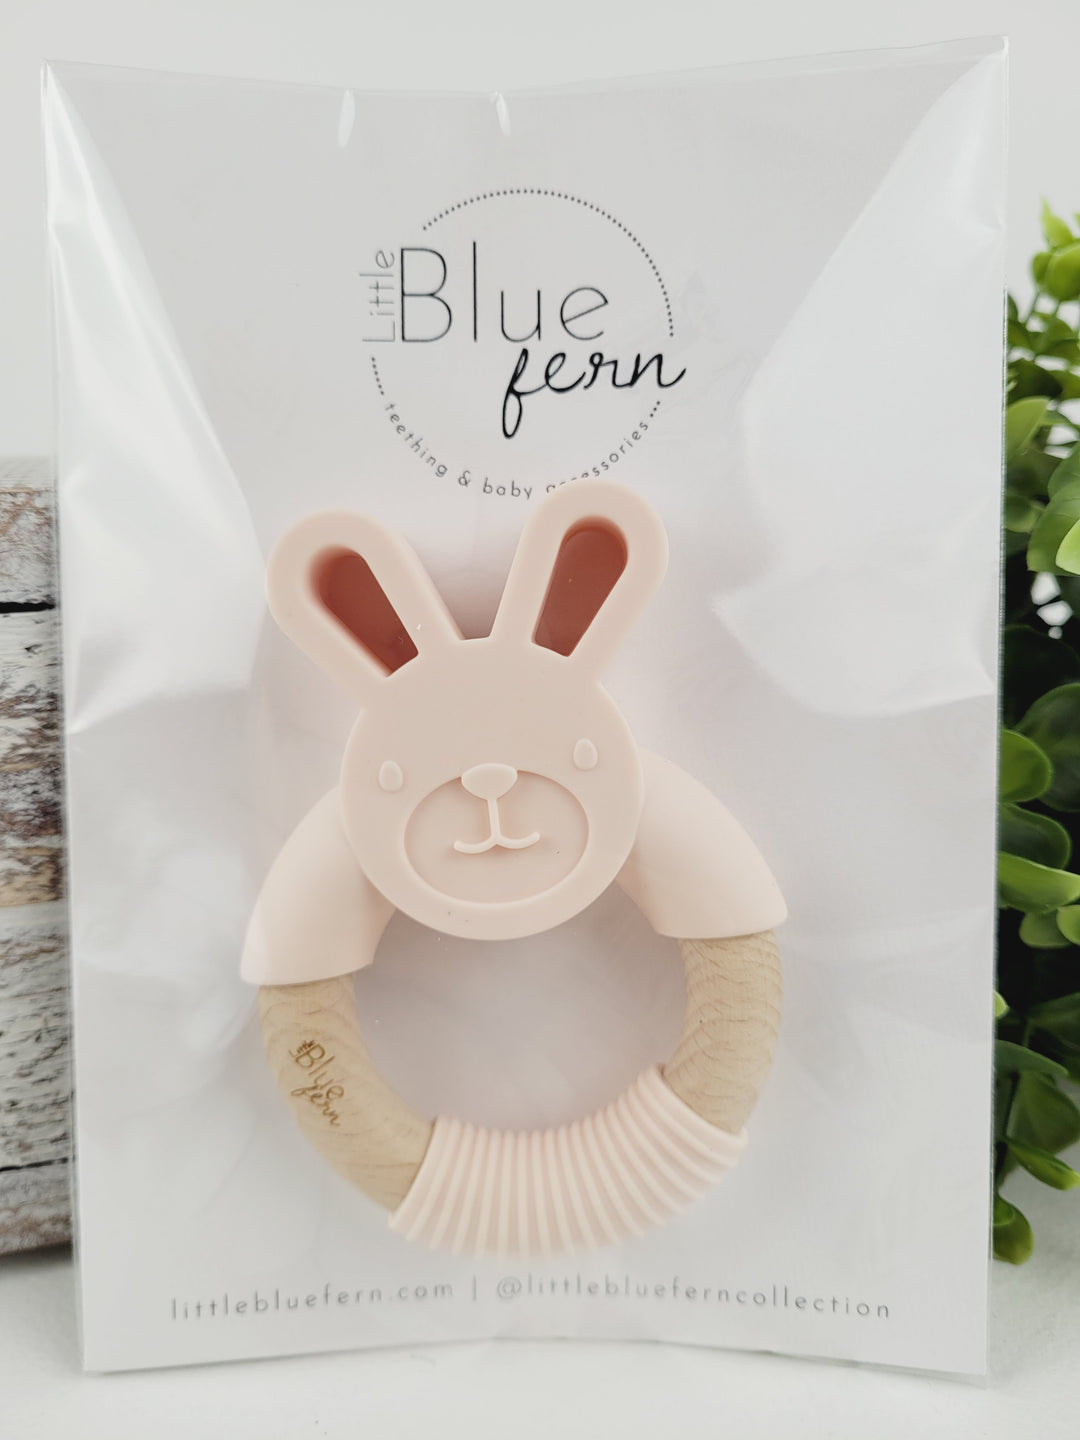 Little Blue Fern, Silicone & Wood Bunny Teethers